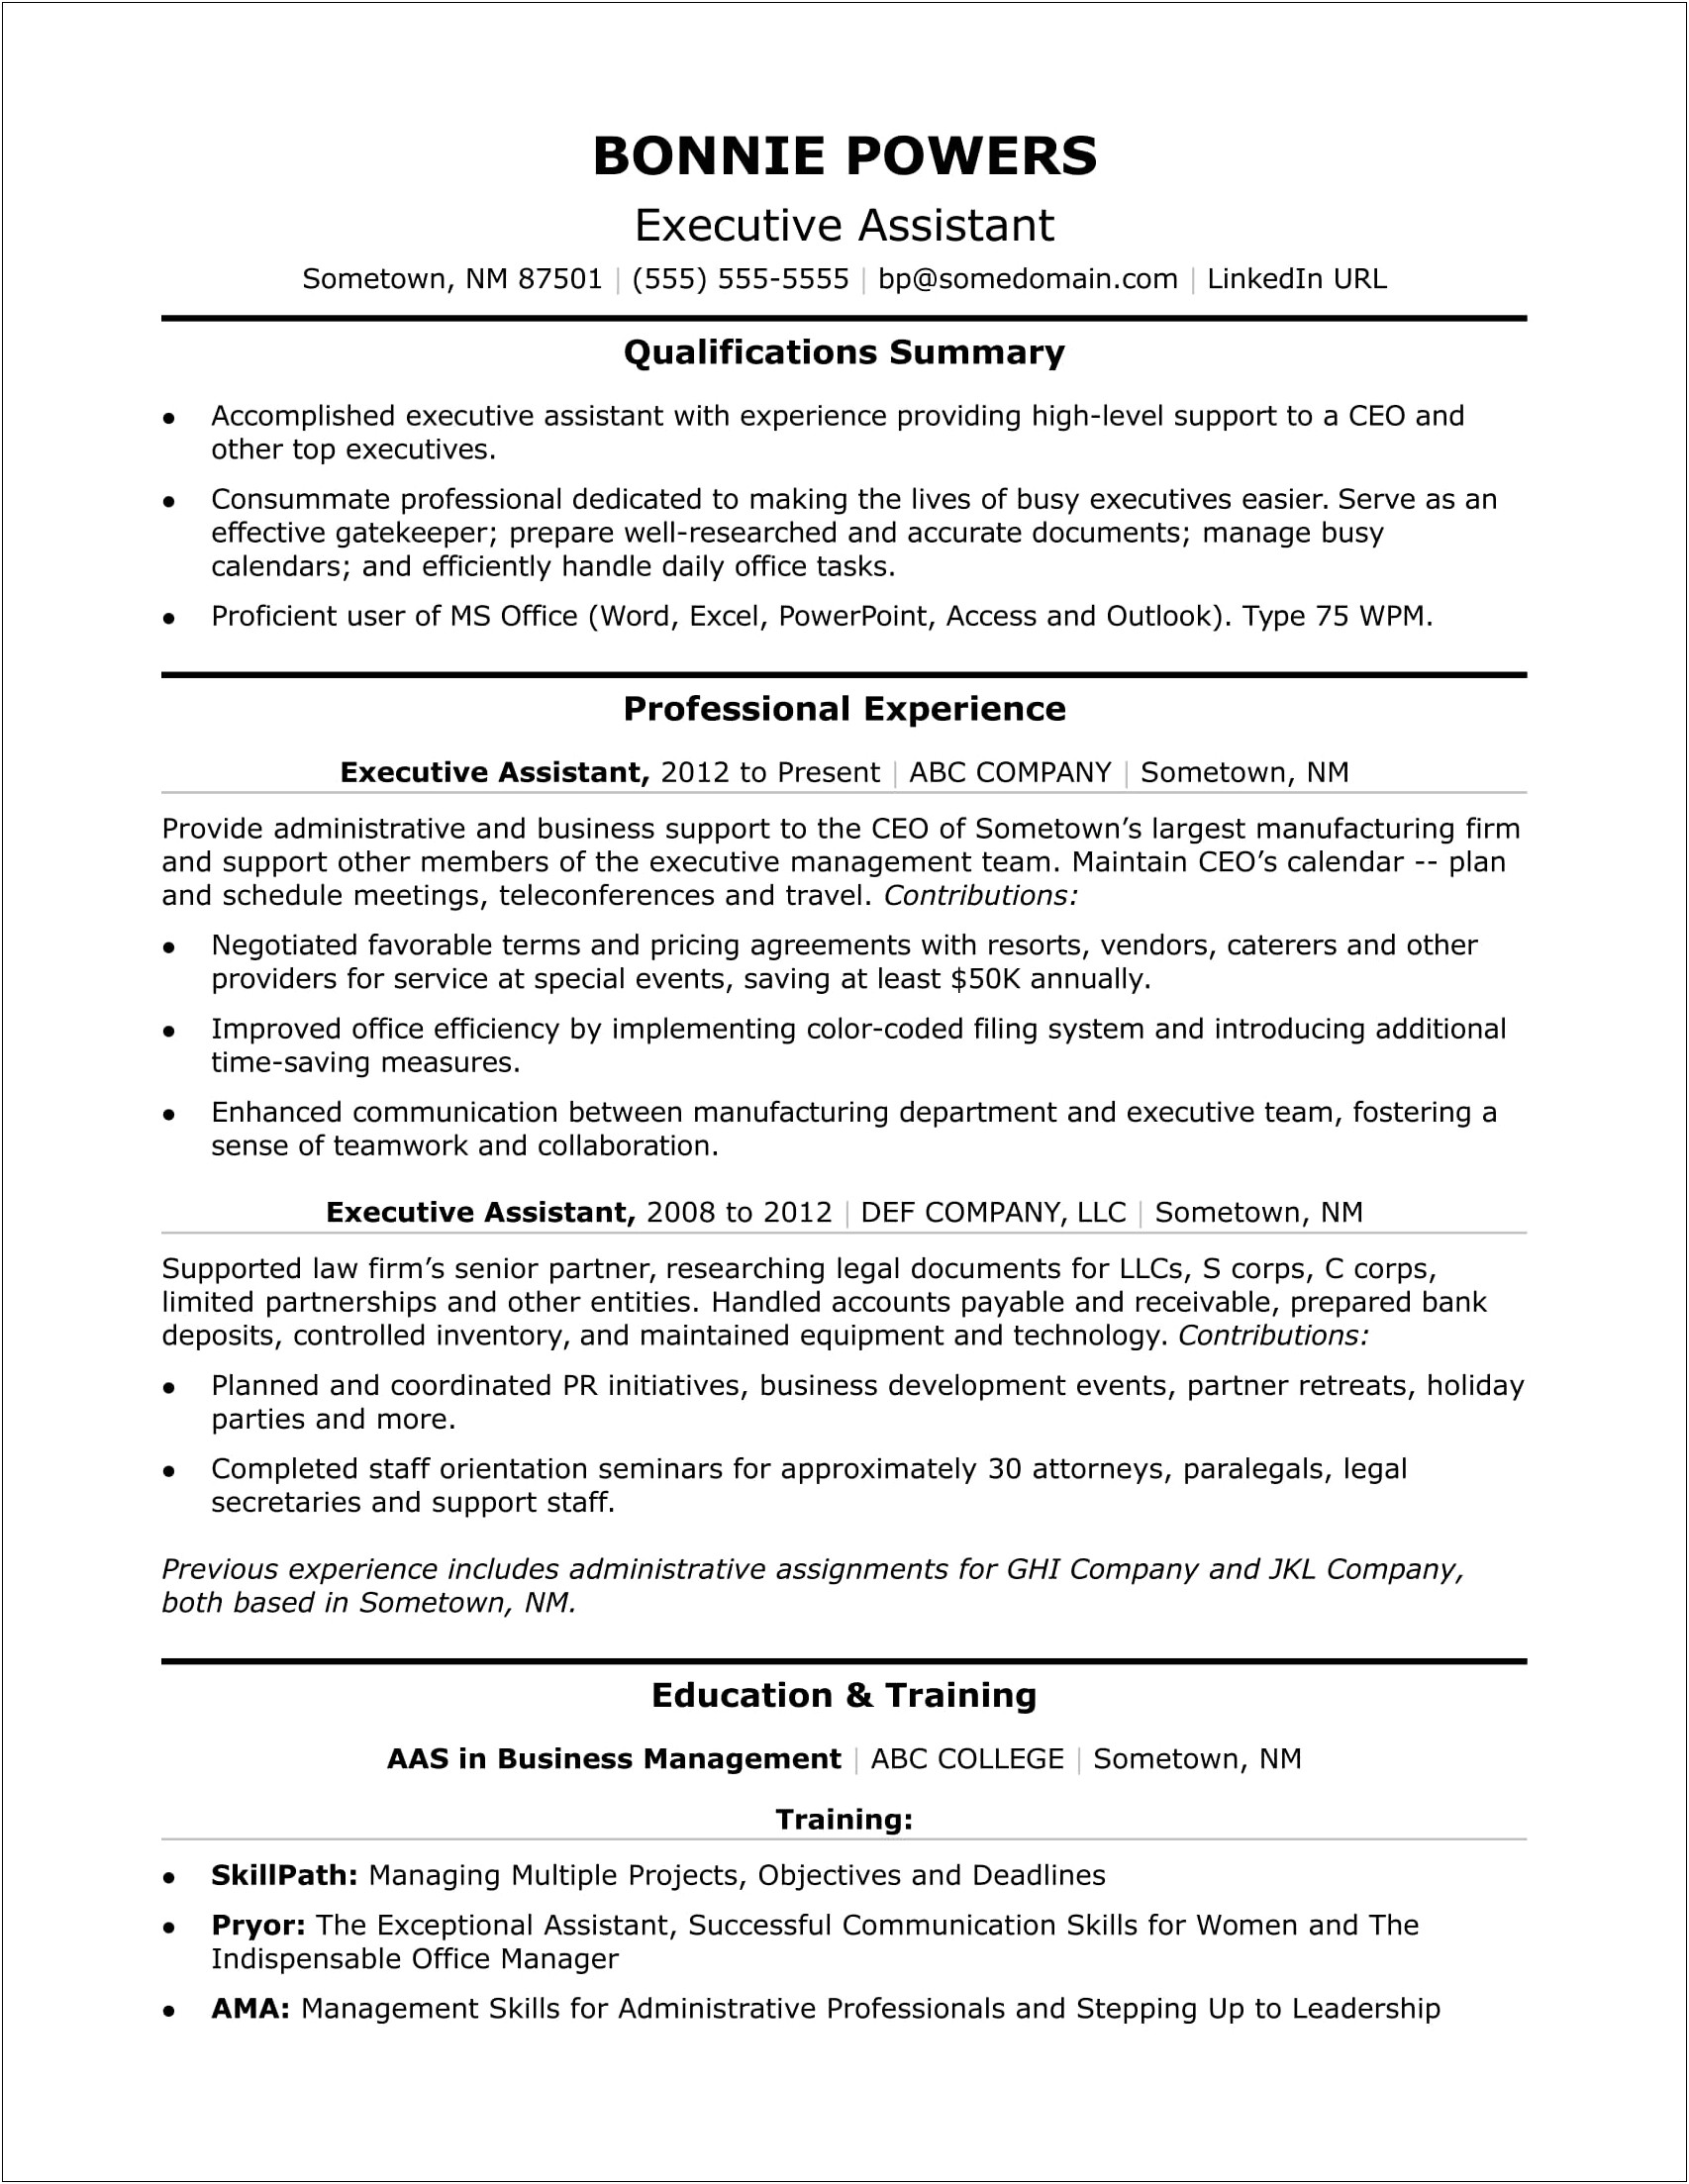 Columbia Bank Customer Care Job Description Resume Sample